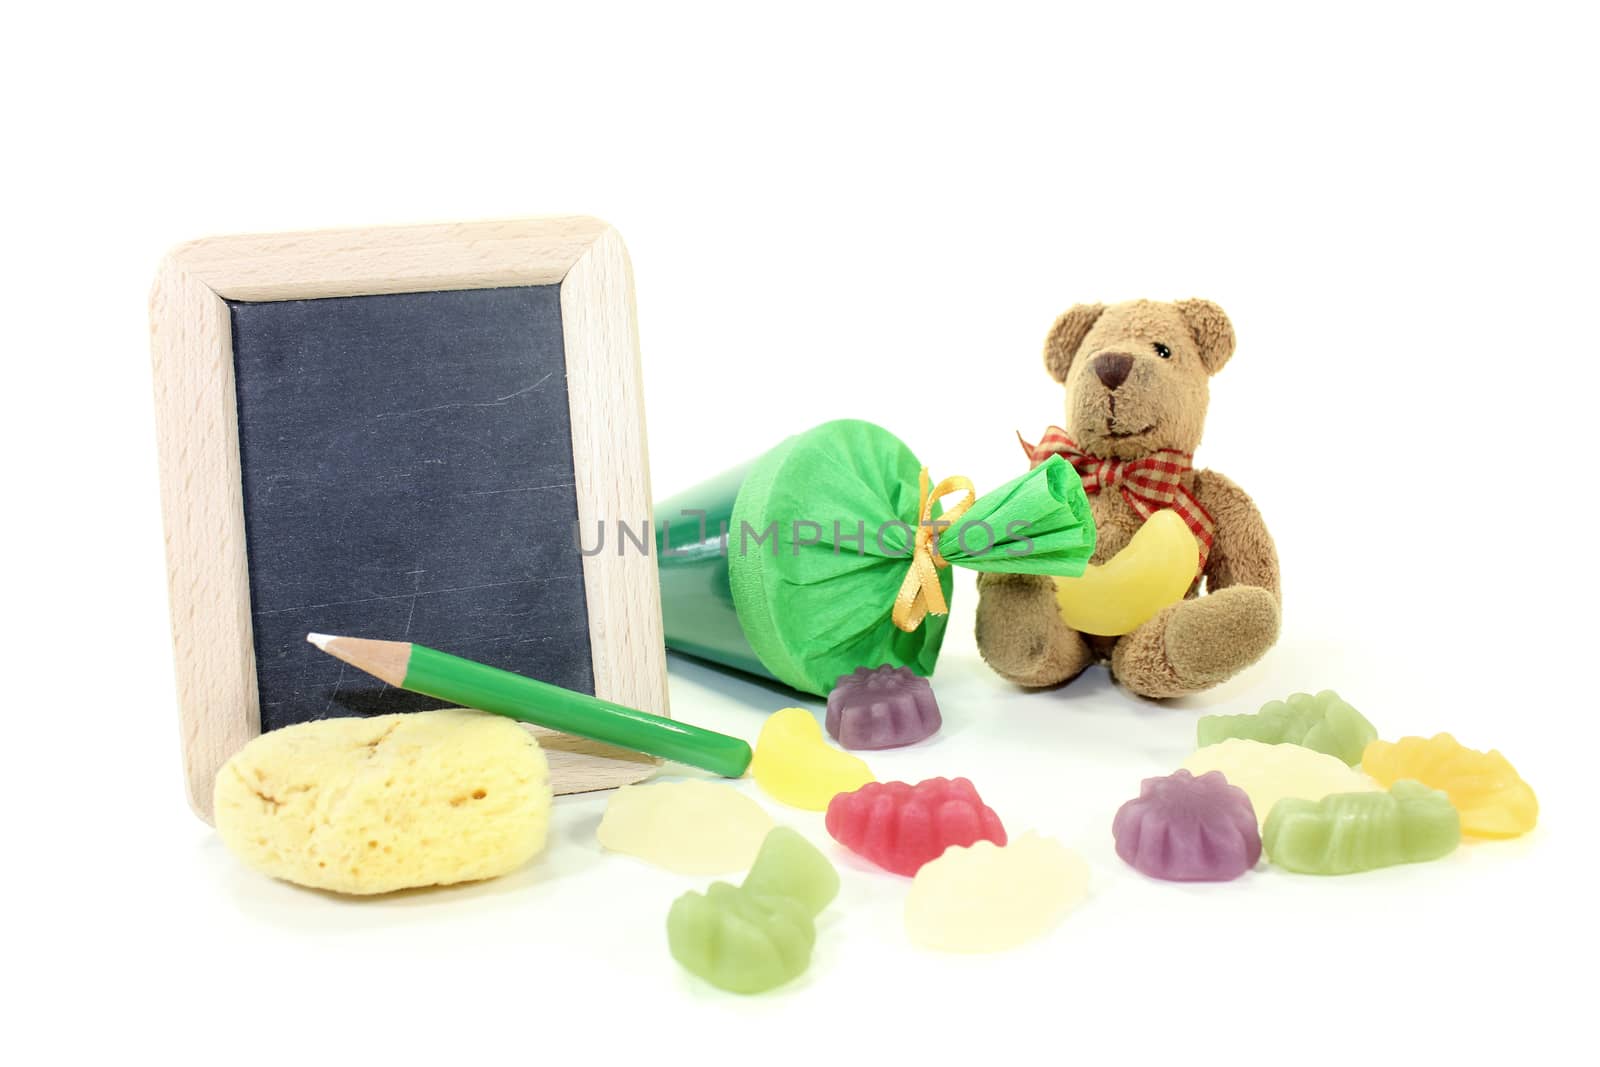 Teddy bear with school bag, wallet, pen and blackboard on a light background